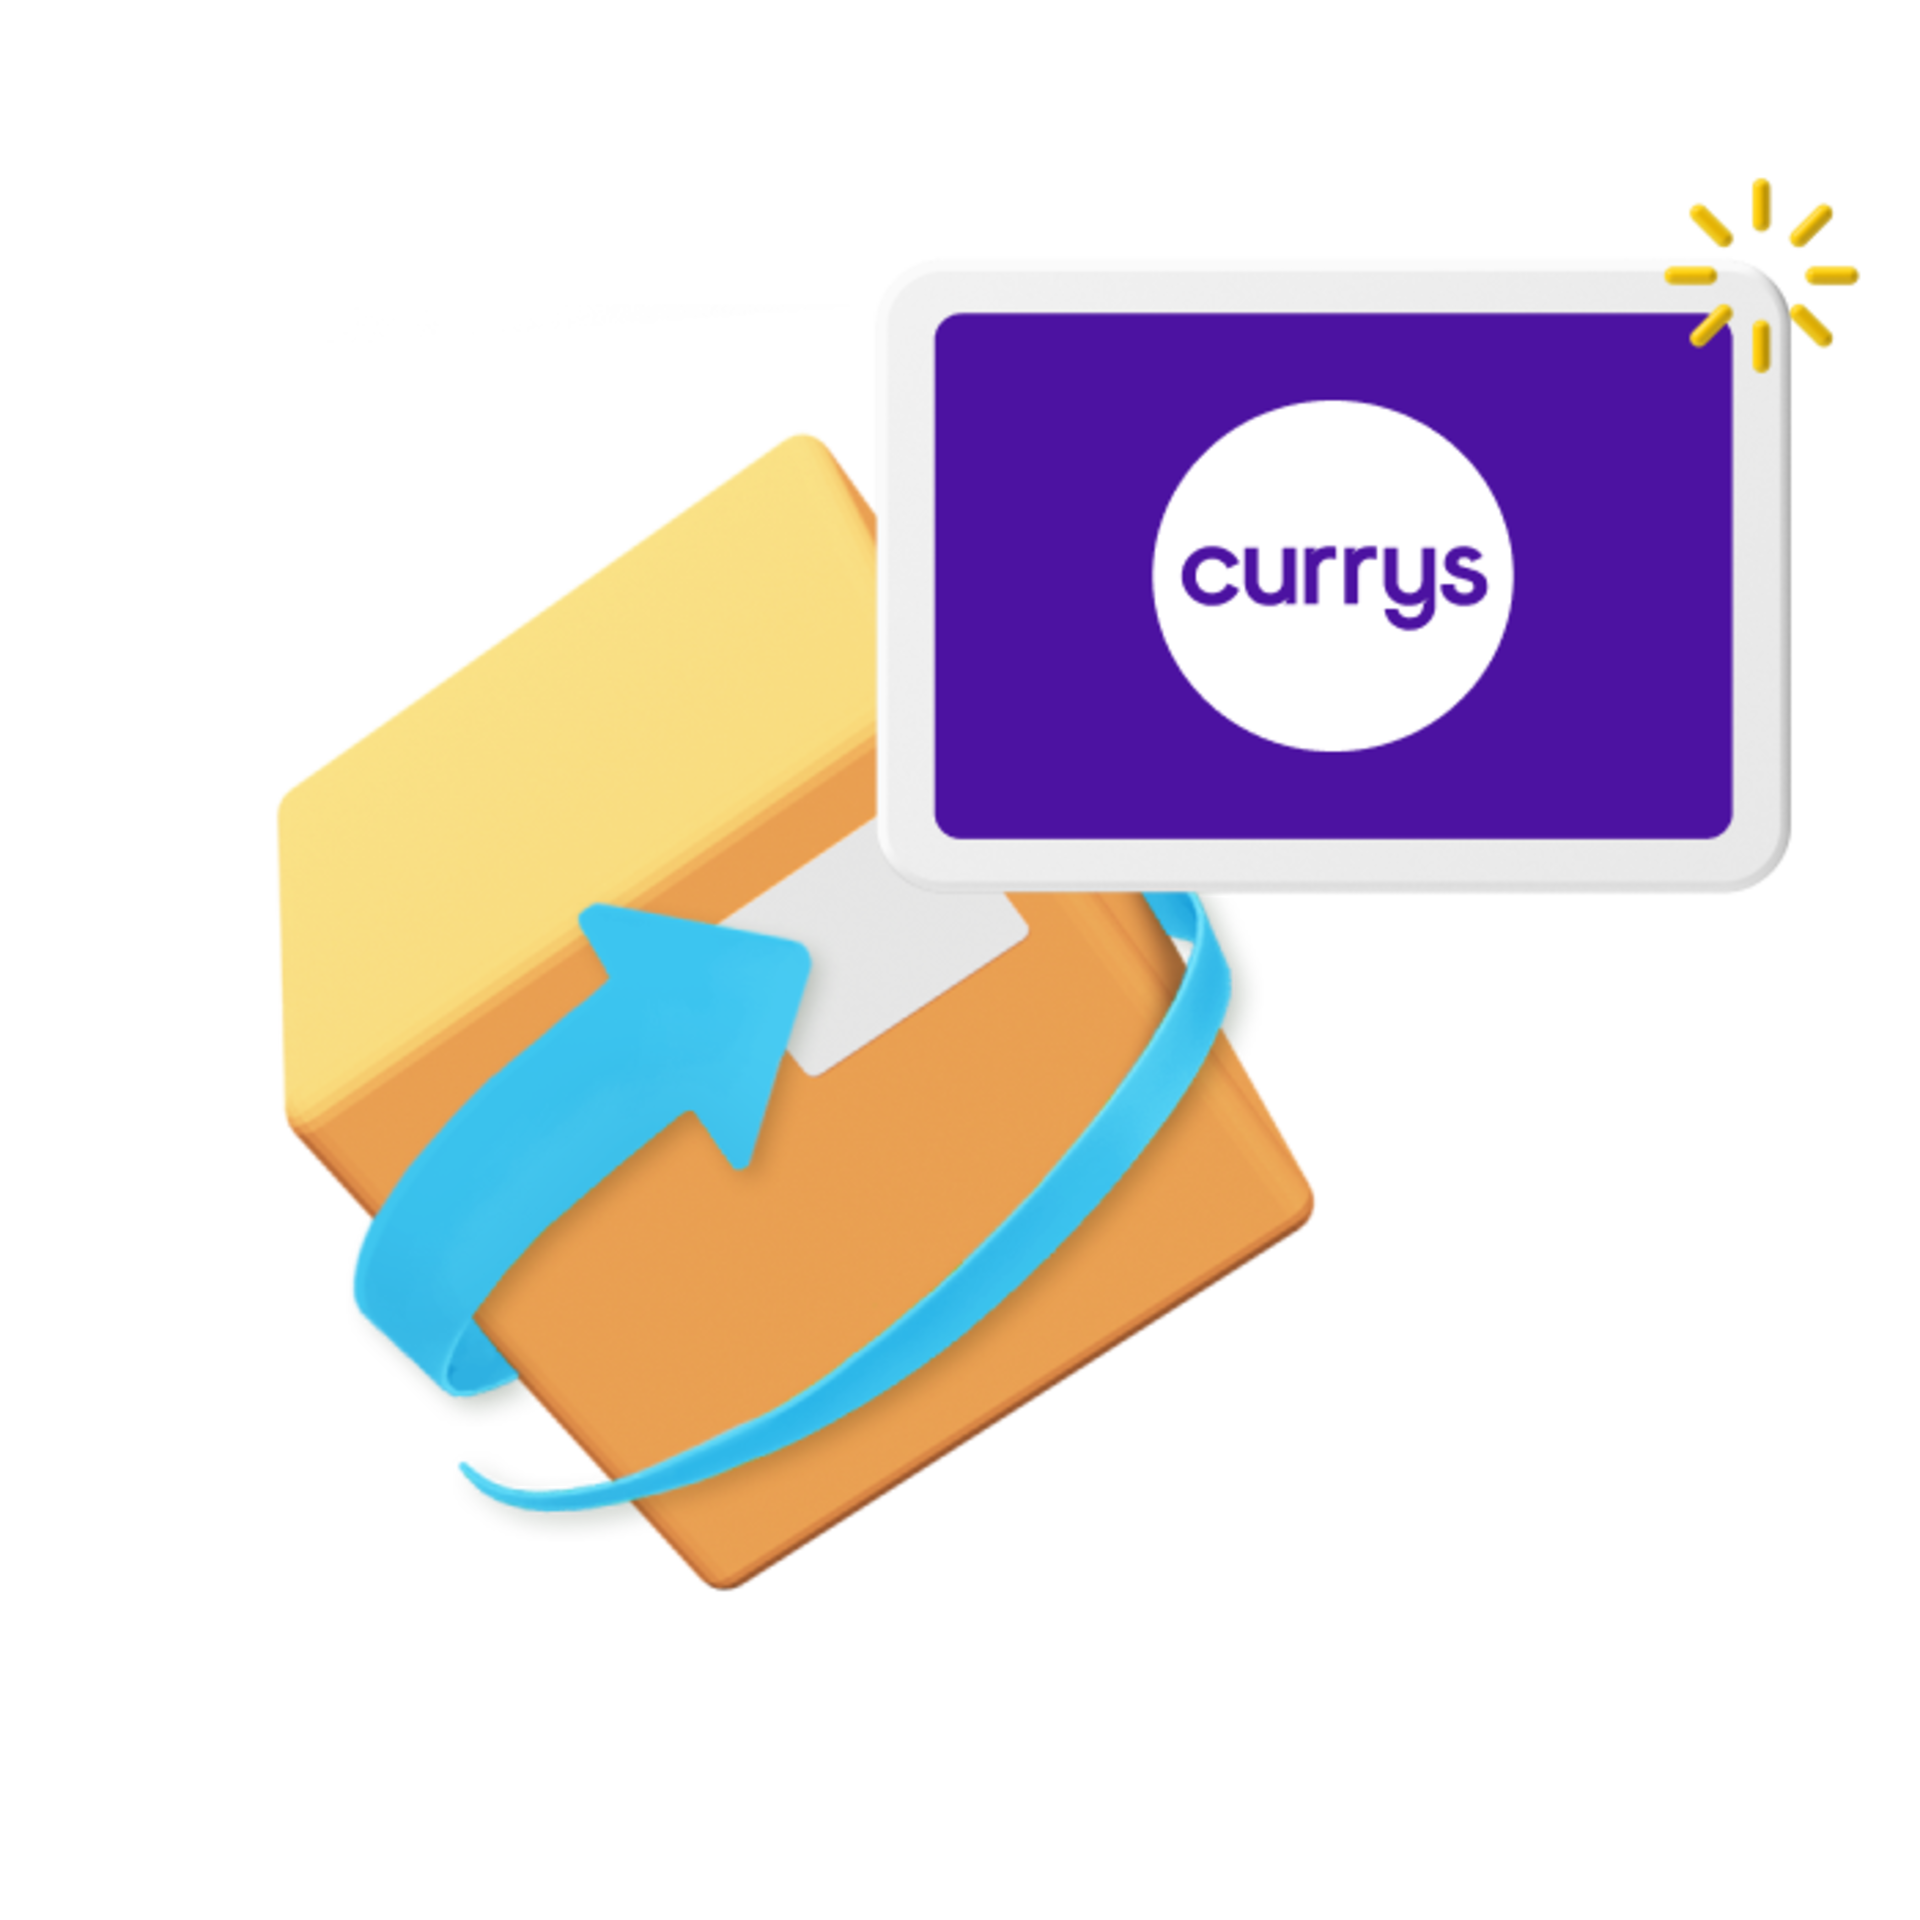 Currys logo returns